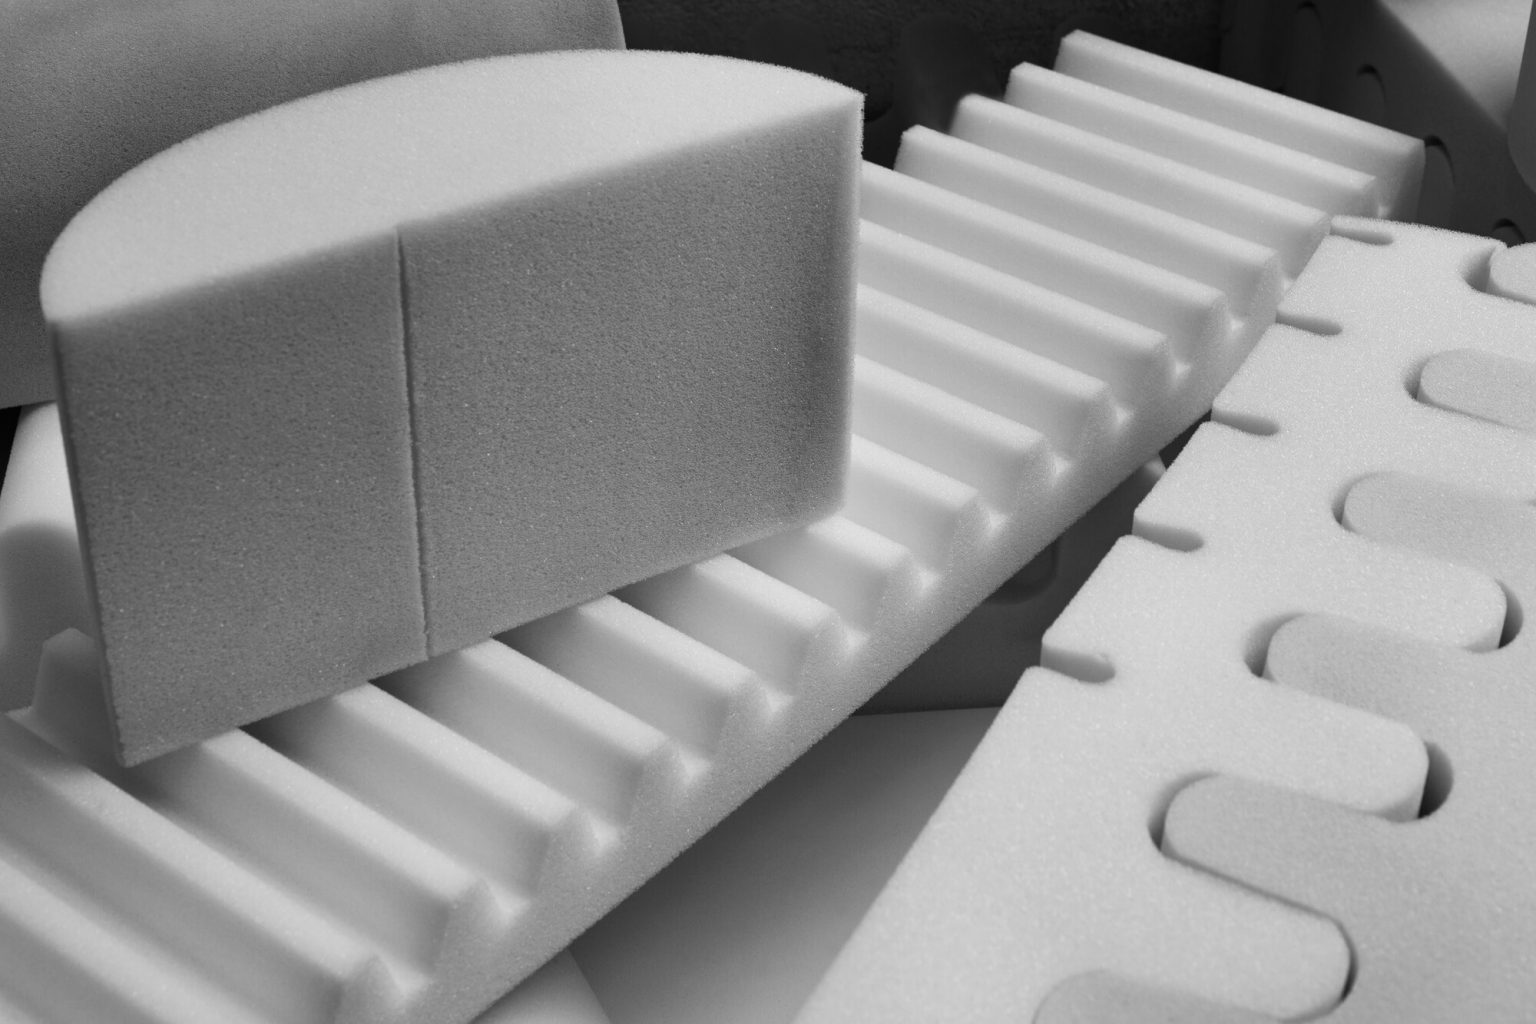 polyurethane foam mattress benefits